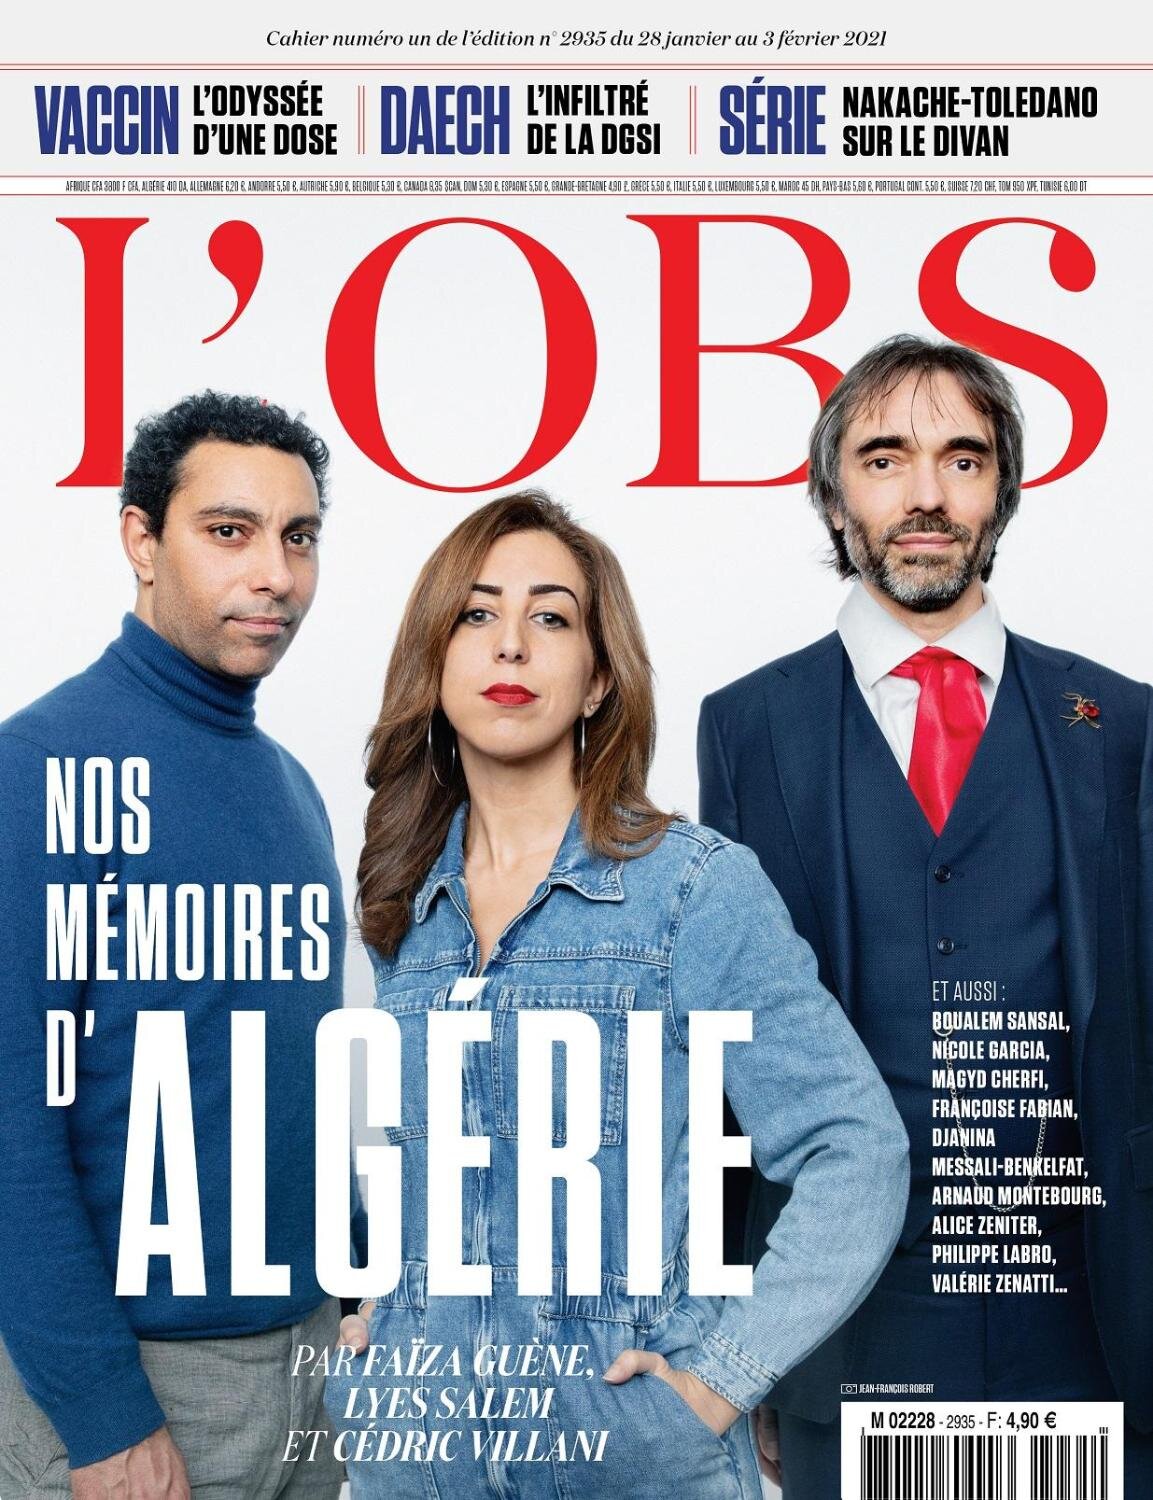 The Algerian Connection: French-born artists Lyes Salem, Faïza Guène &amp; Cédric Villani.